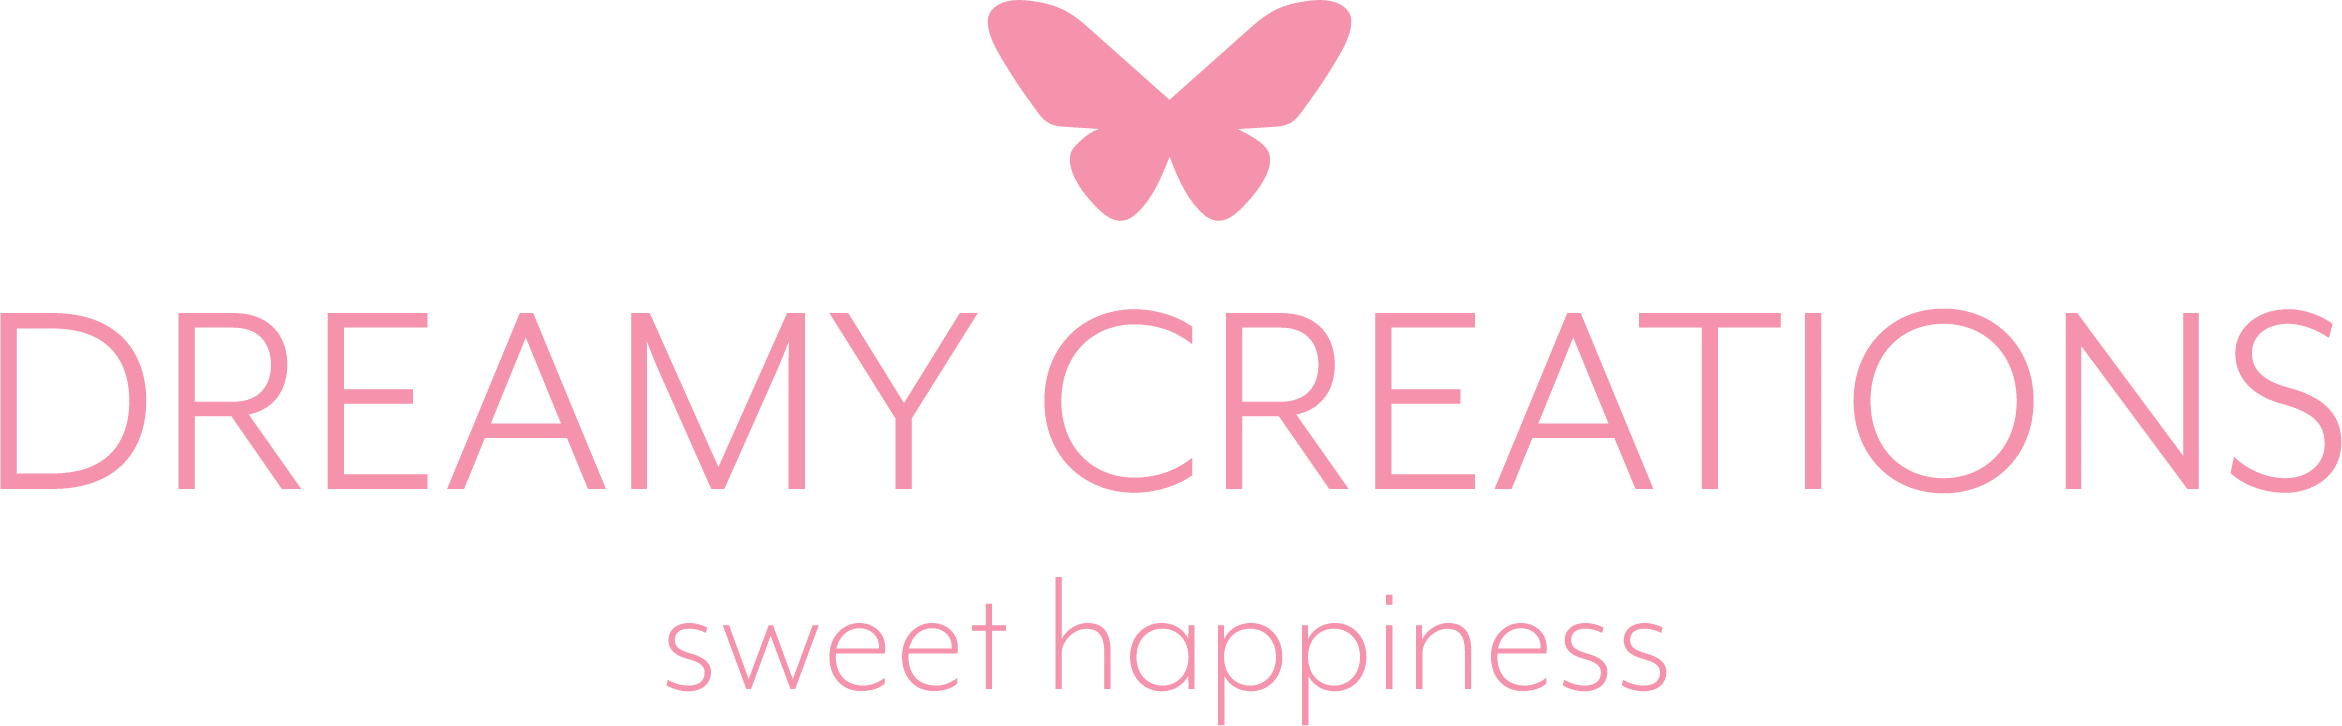 Dreamy Creations Logo